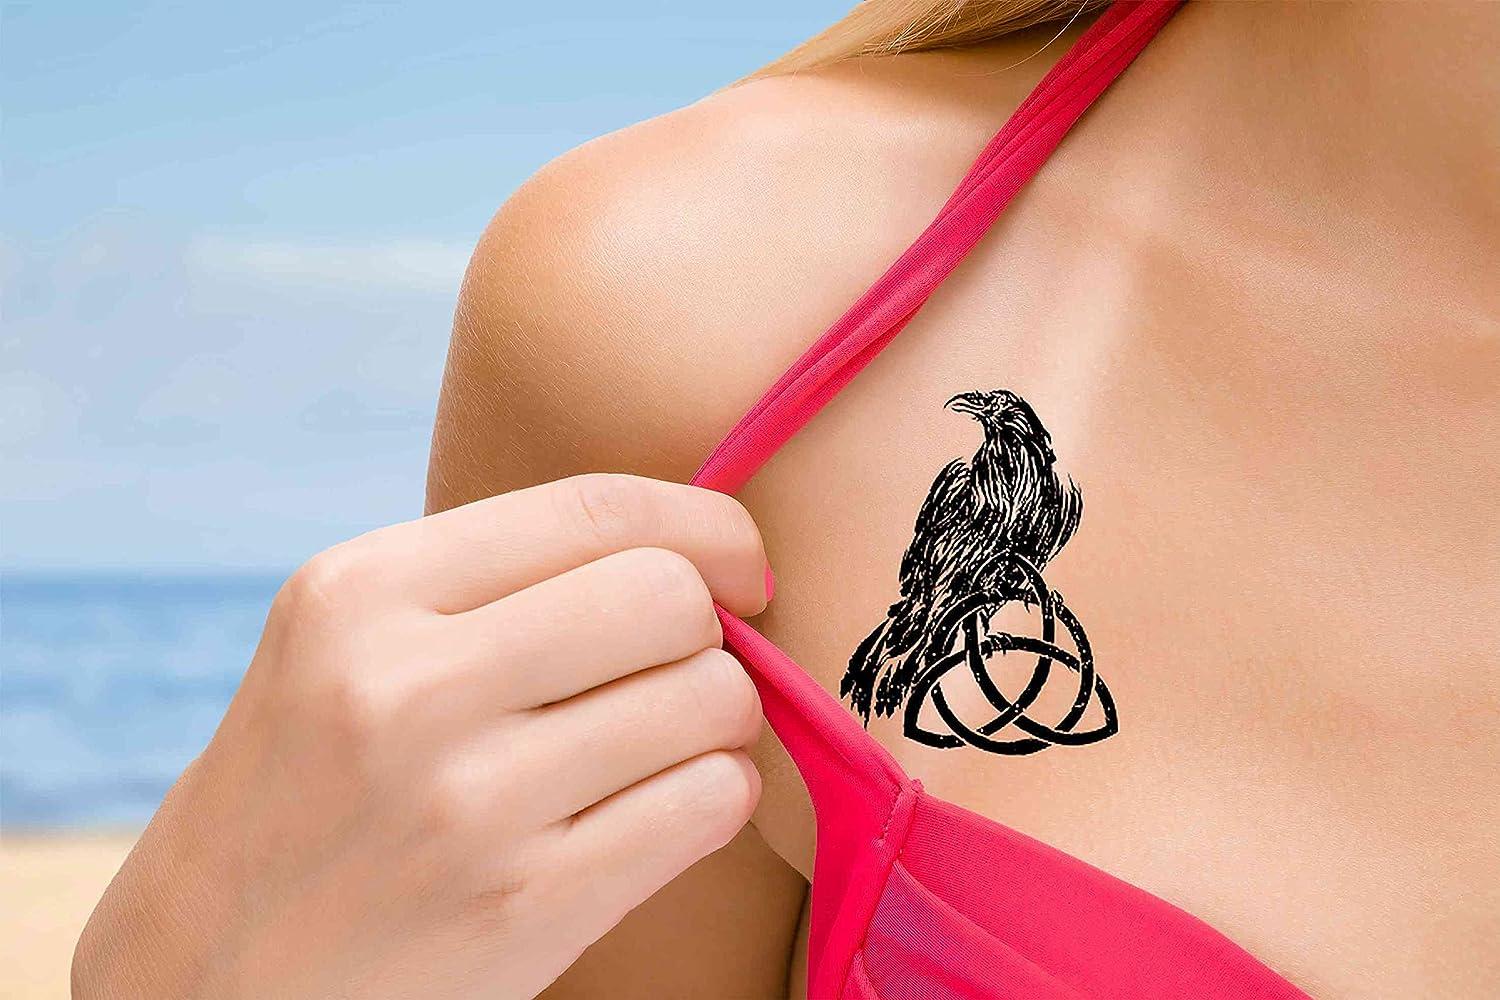 Ravens in flight, by Jon, VisibleInk Tattoos, Boston Ma. : r/tattoos